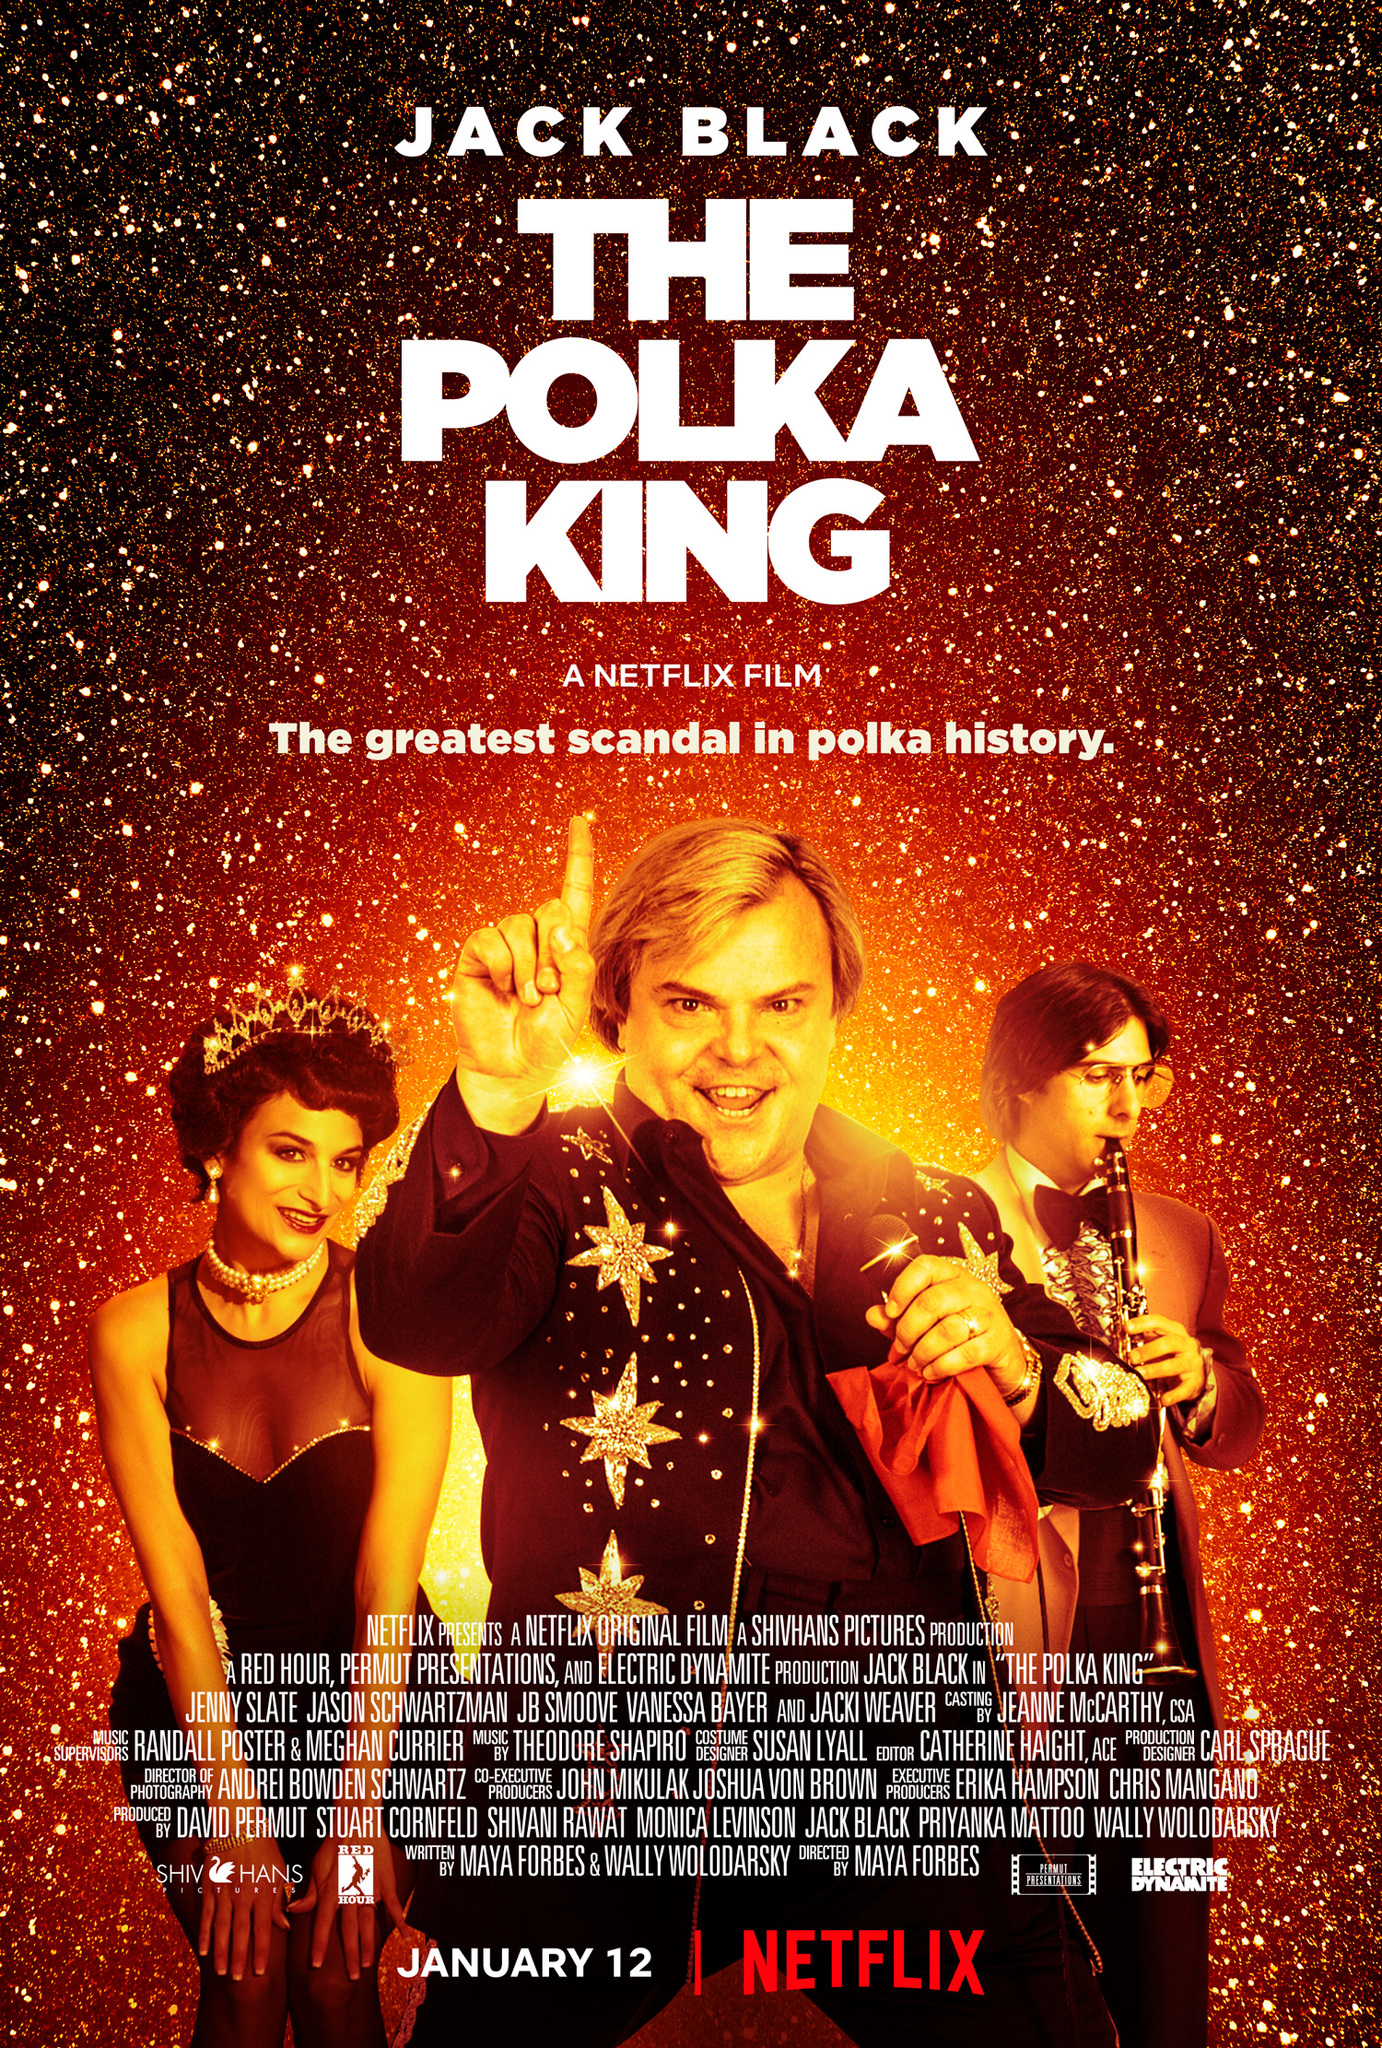 Nonton film The Polka King layarkaca21 indoxx1 ganool online streaming terbaru